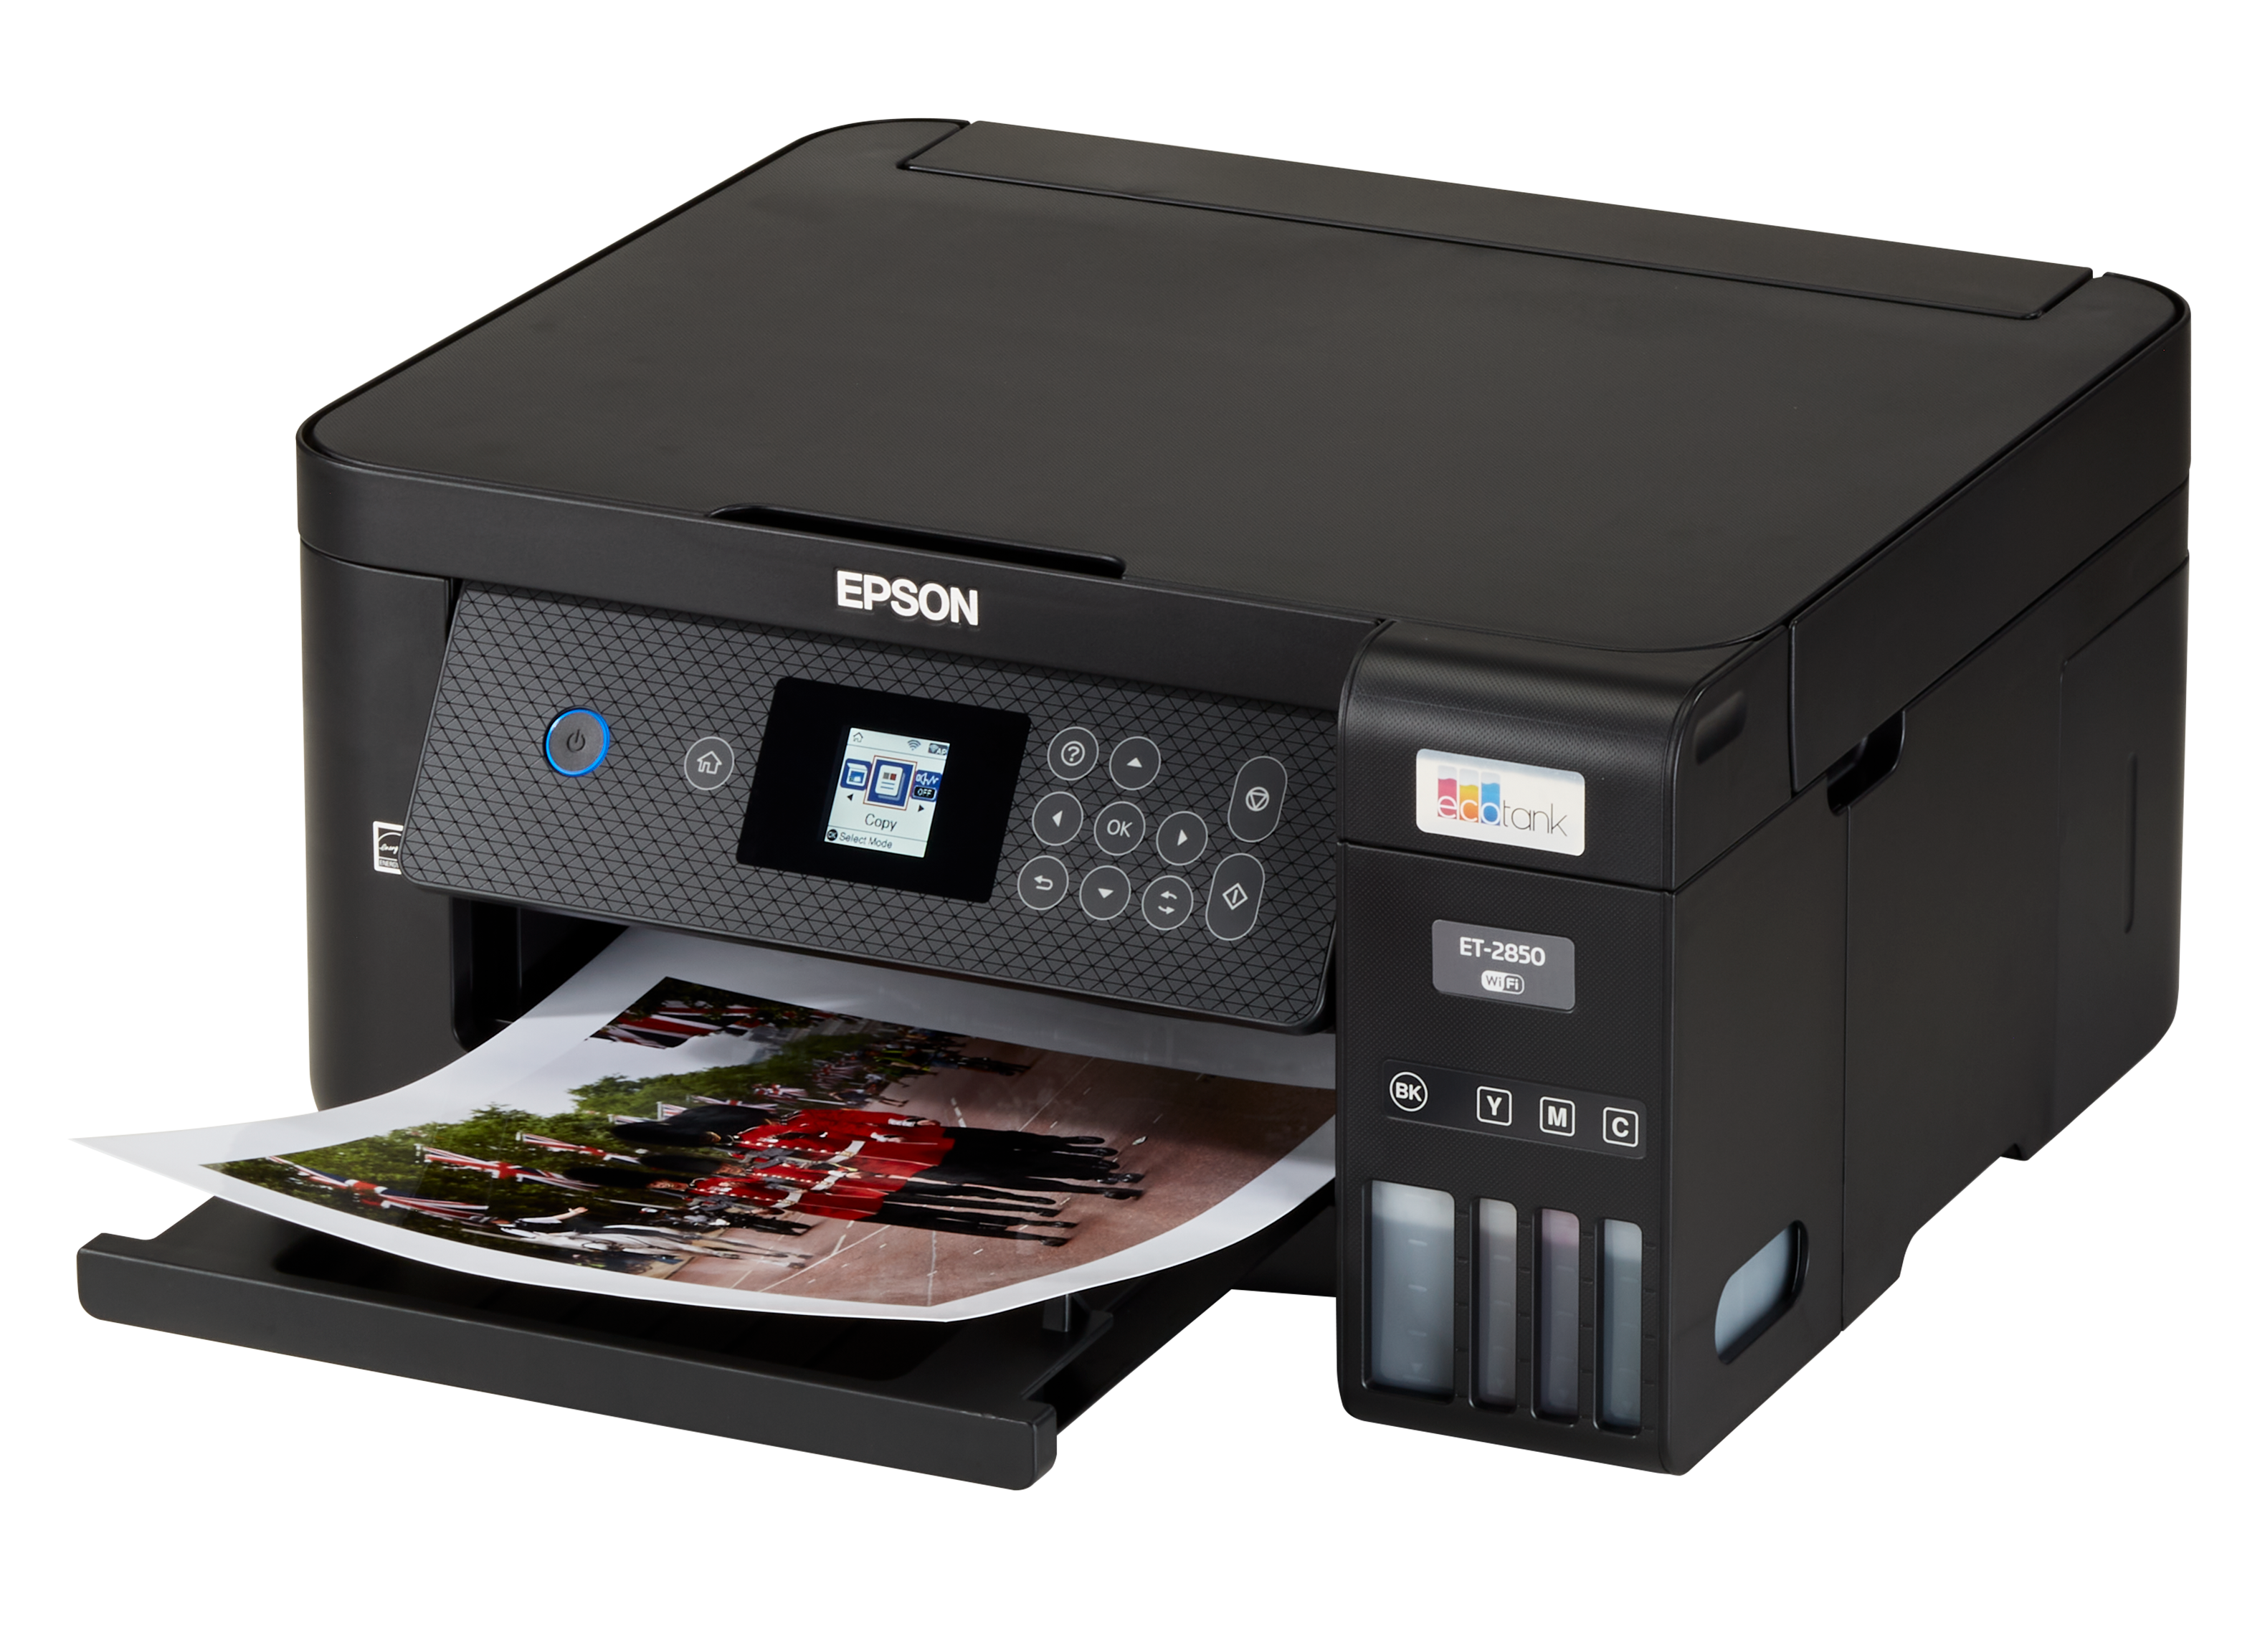 Epson EcoTank ET-2850 Printer Review - Consumer Reports